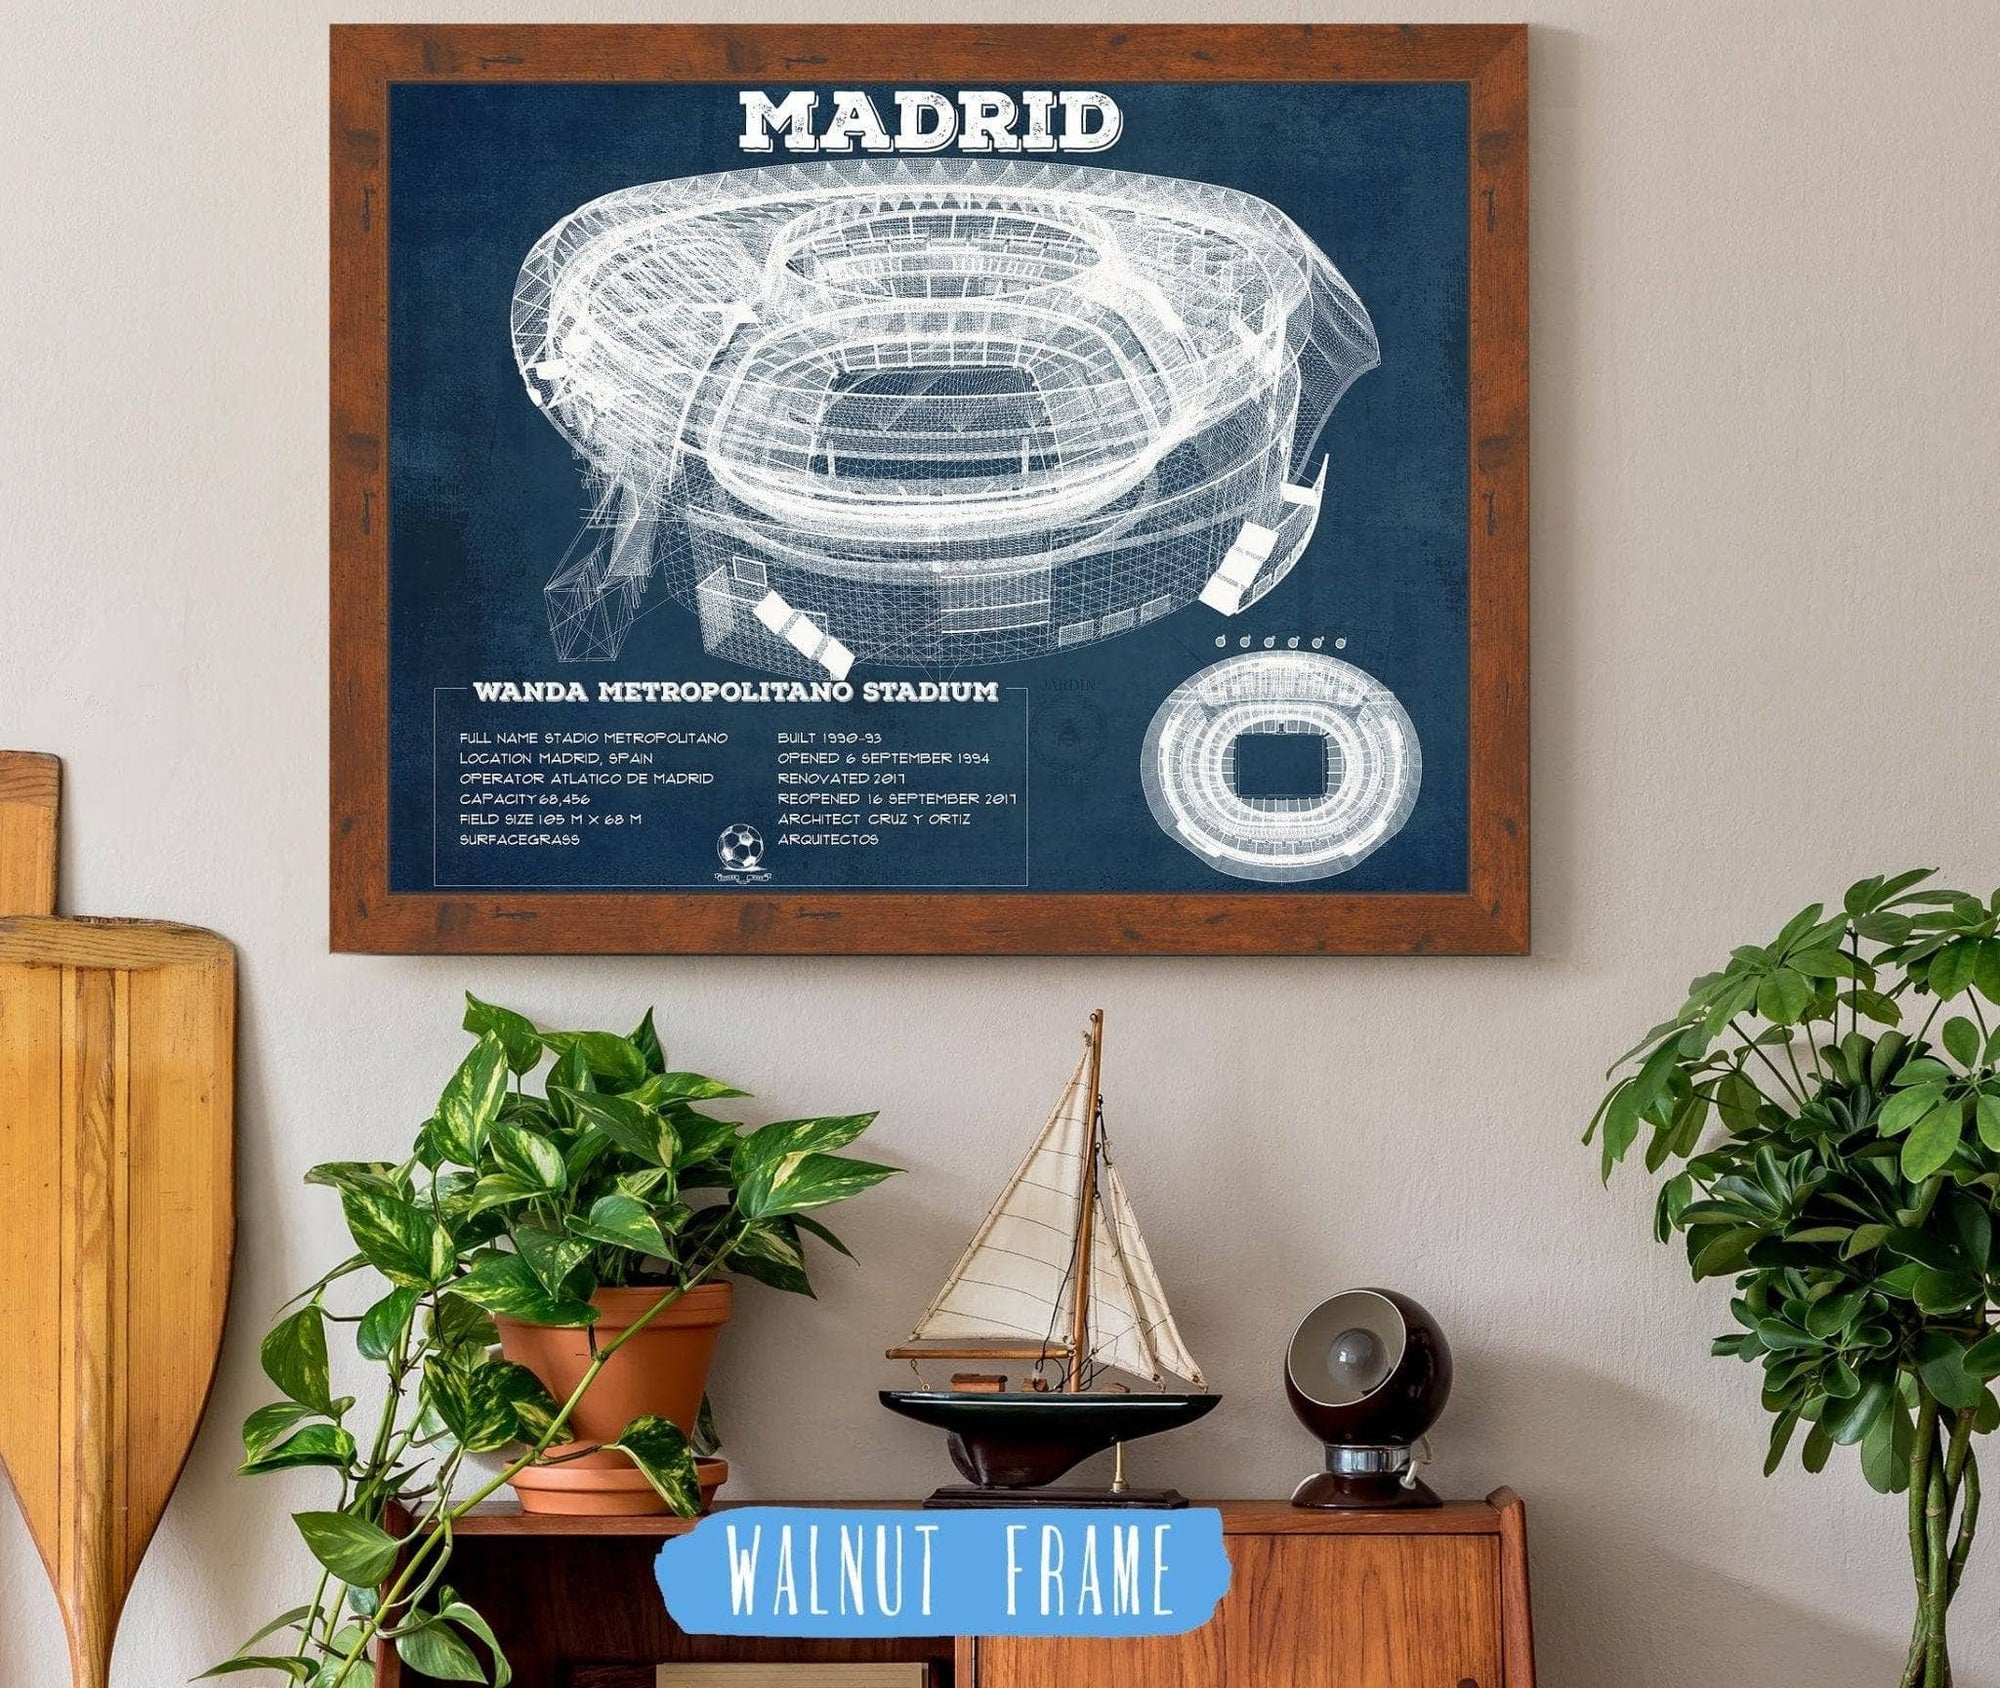 Cutler West Soccer Collection 14" x 11" / Walnut Frame Atlético Madrid FC Wanda Metropolitano Stadium Soccer Print 746287285_51776